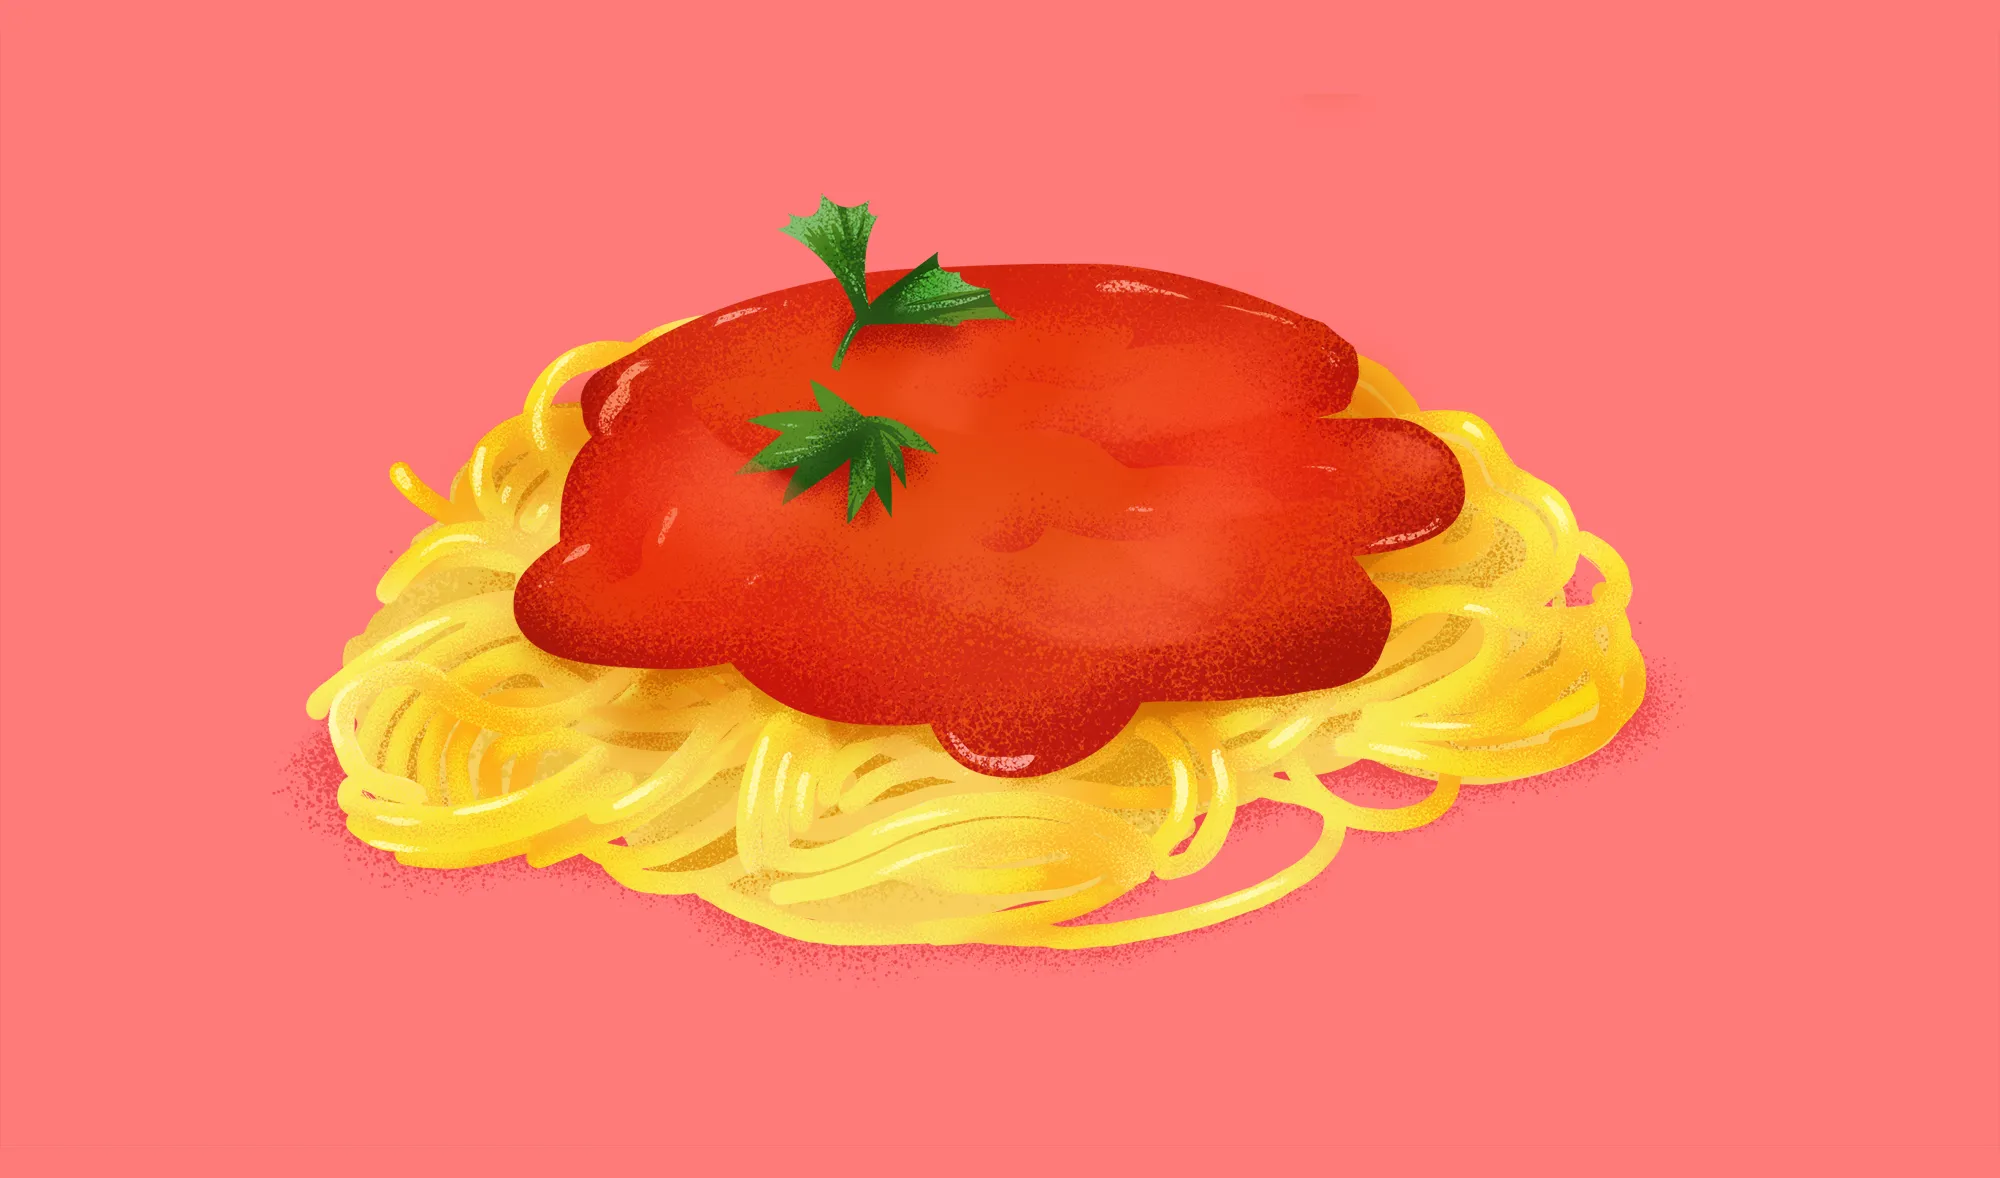 Spaghetti et sauce tomate - Illustration rétro